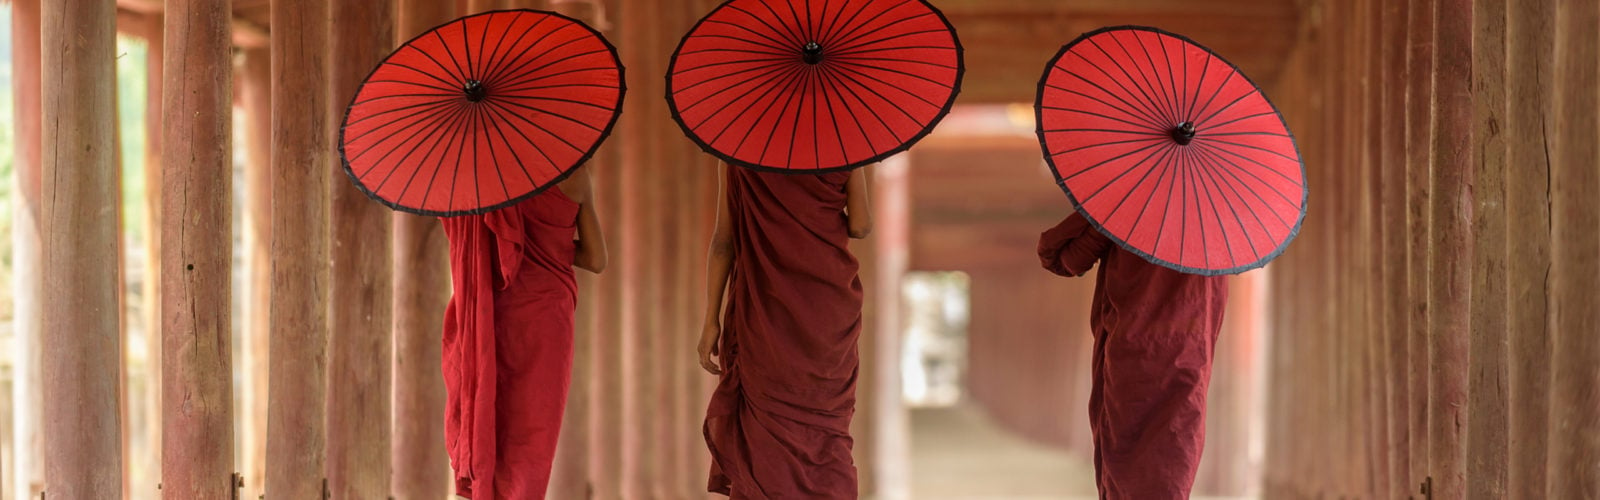 bagan-monks-with-umbrellas